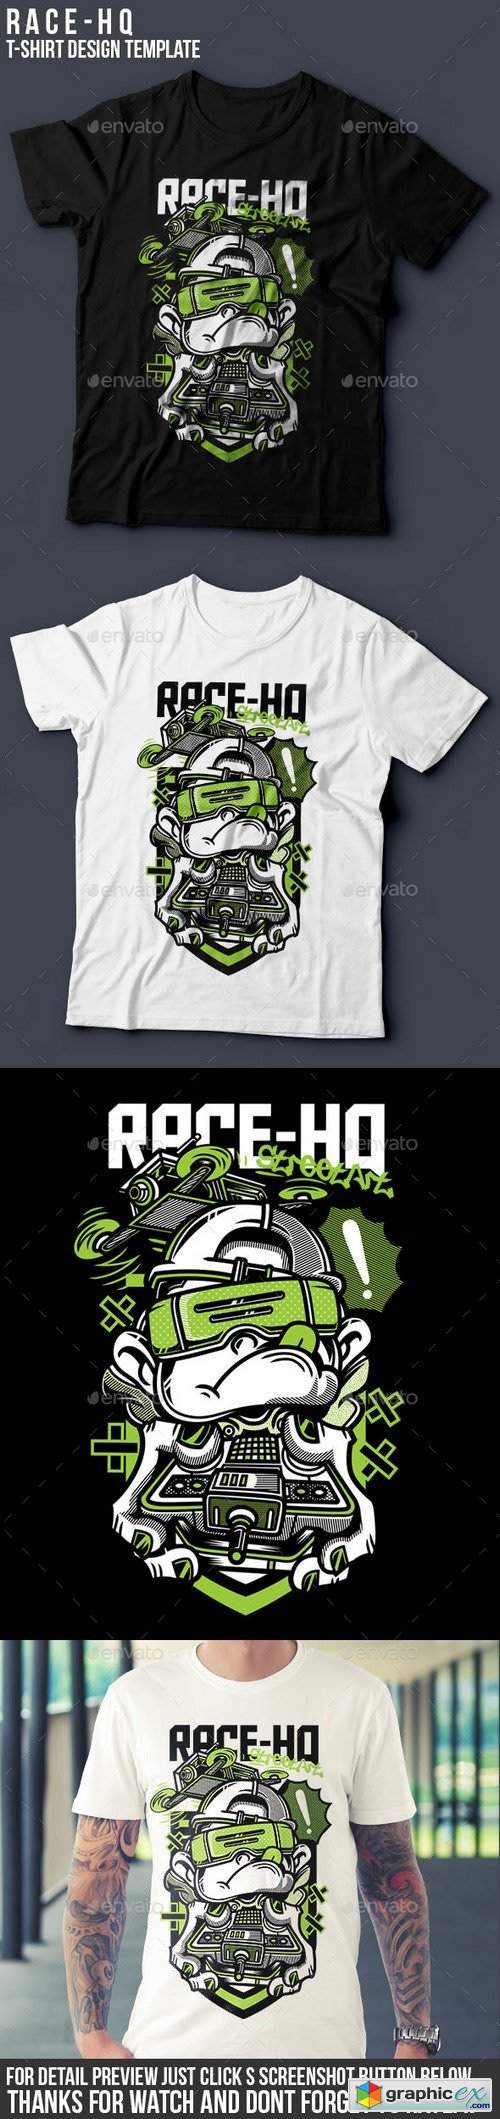 Race-HQ T-Shirt Design